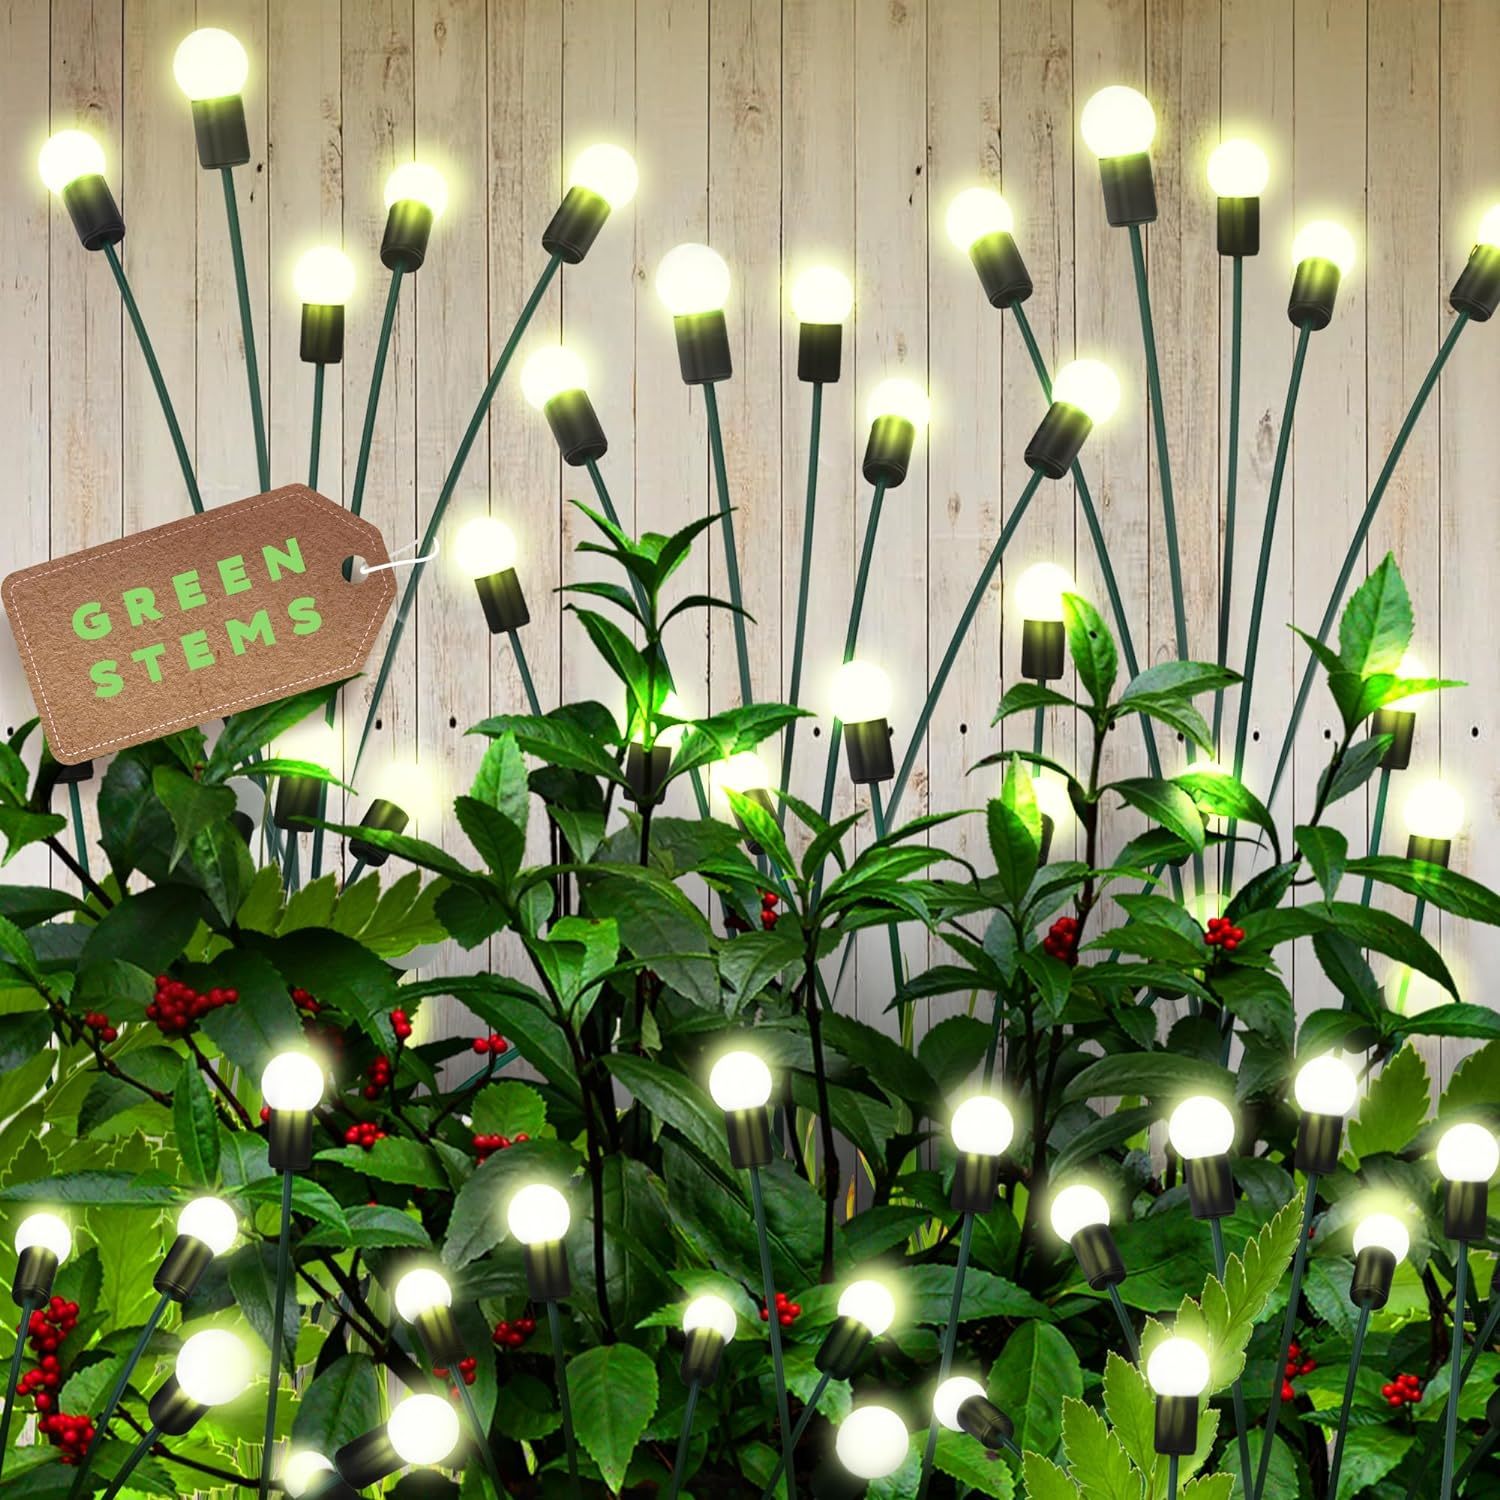 24 LEDs Firefly Garden Lights Solar Outdoor with Green Stems 3 Pack Solar Garden - $56.92